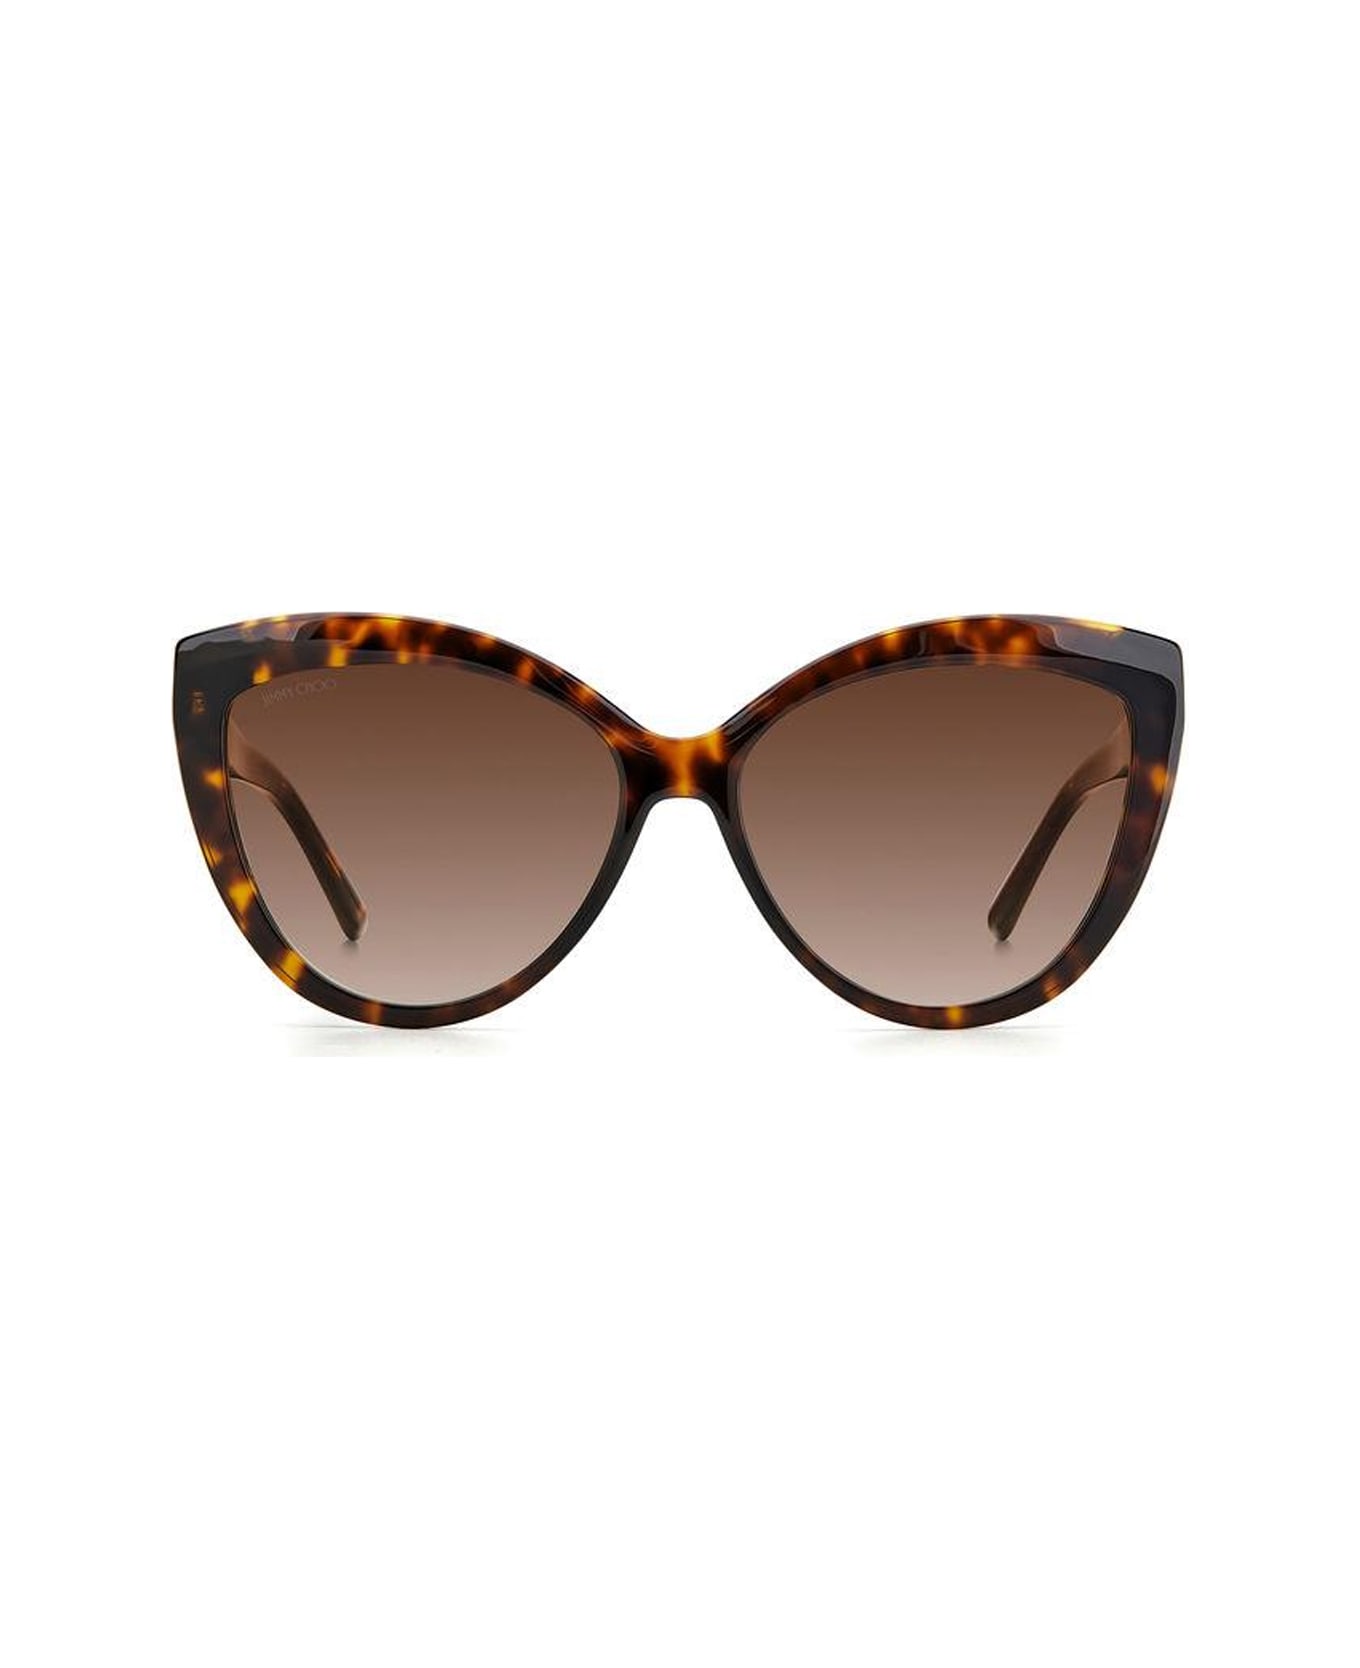 Jimmy Choo Eyewear Sinnie/g/s Sunglasses - Marrone